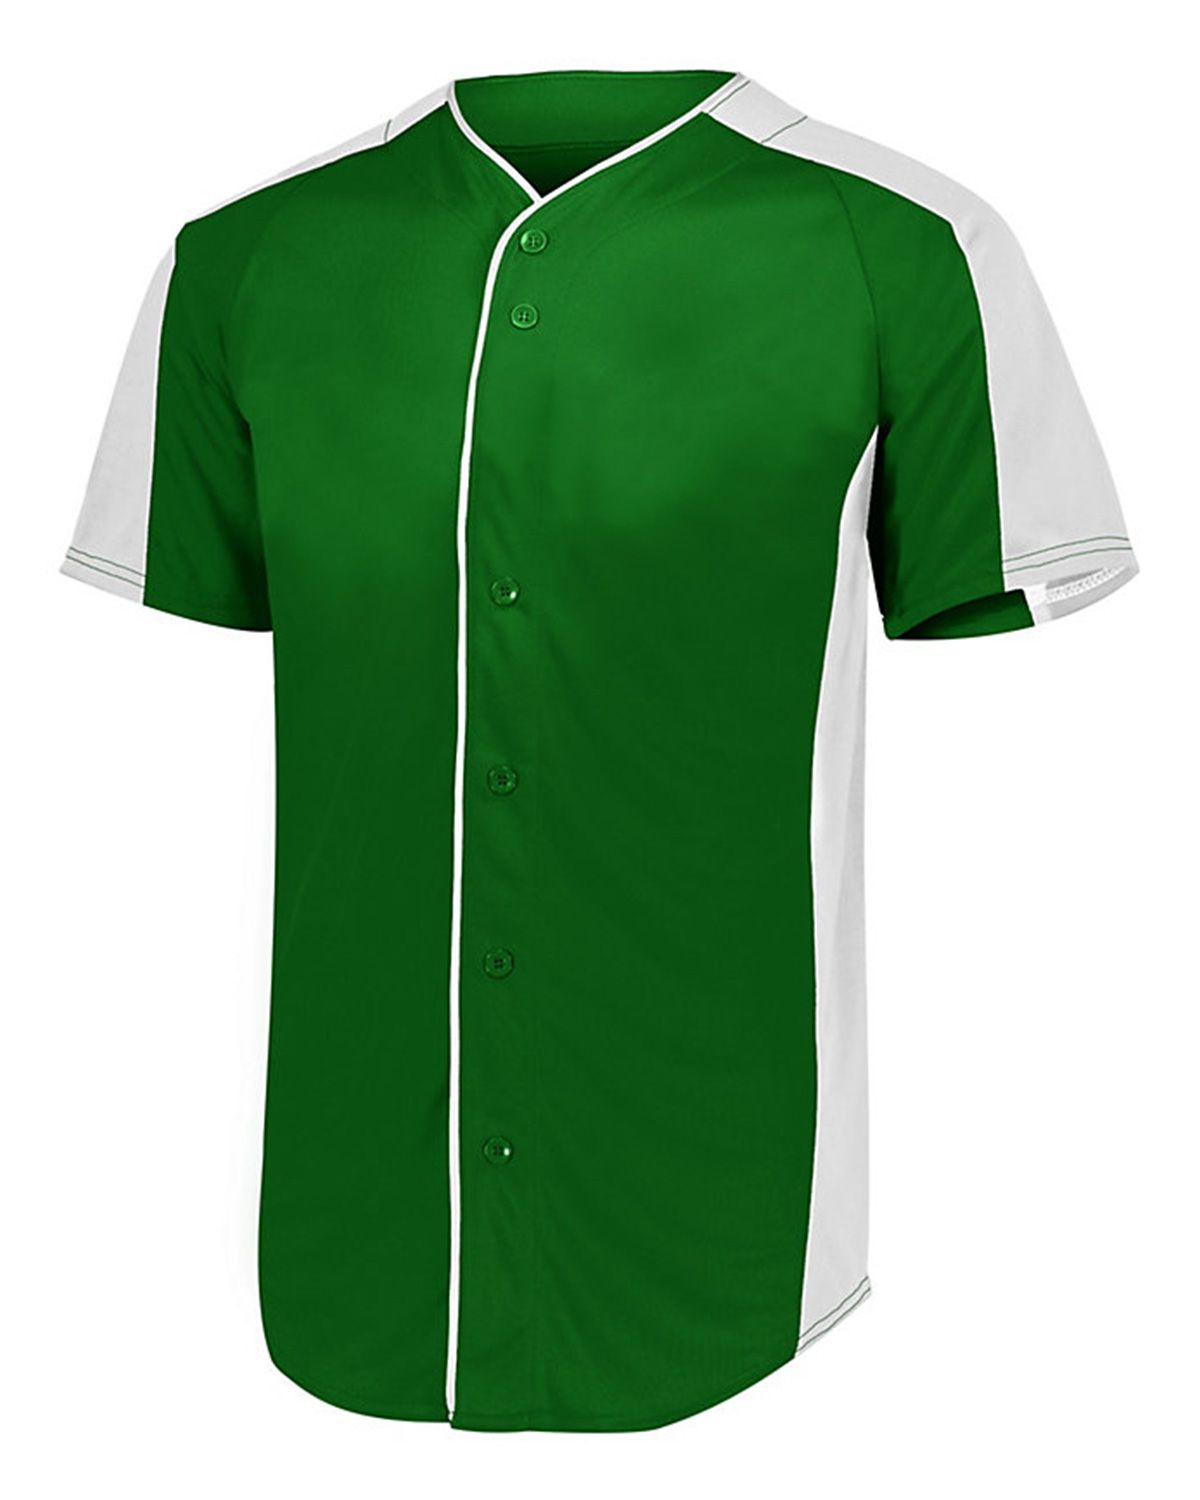 dark green baseball jersey